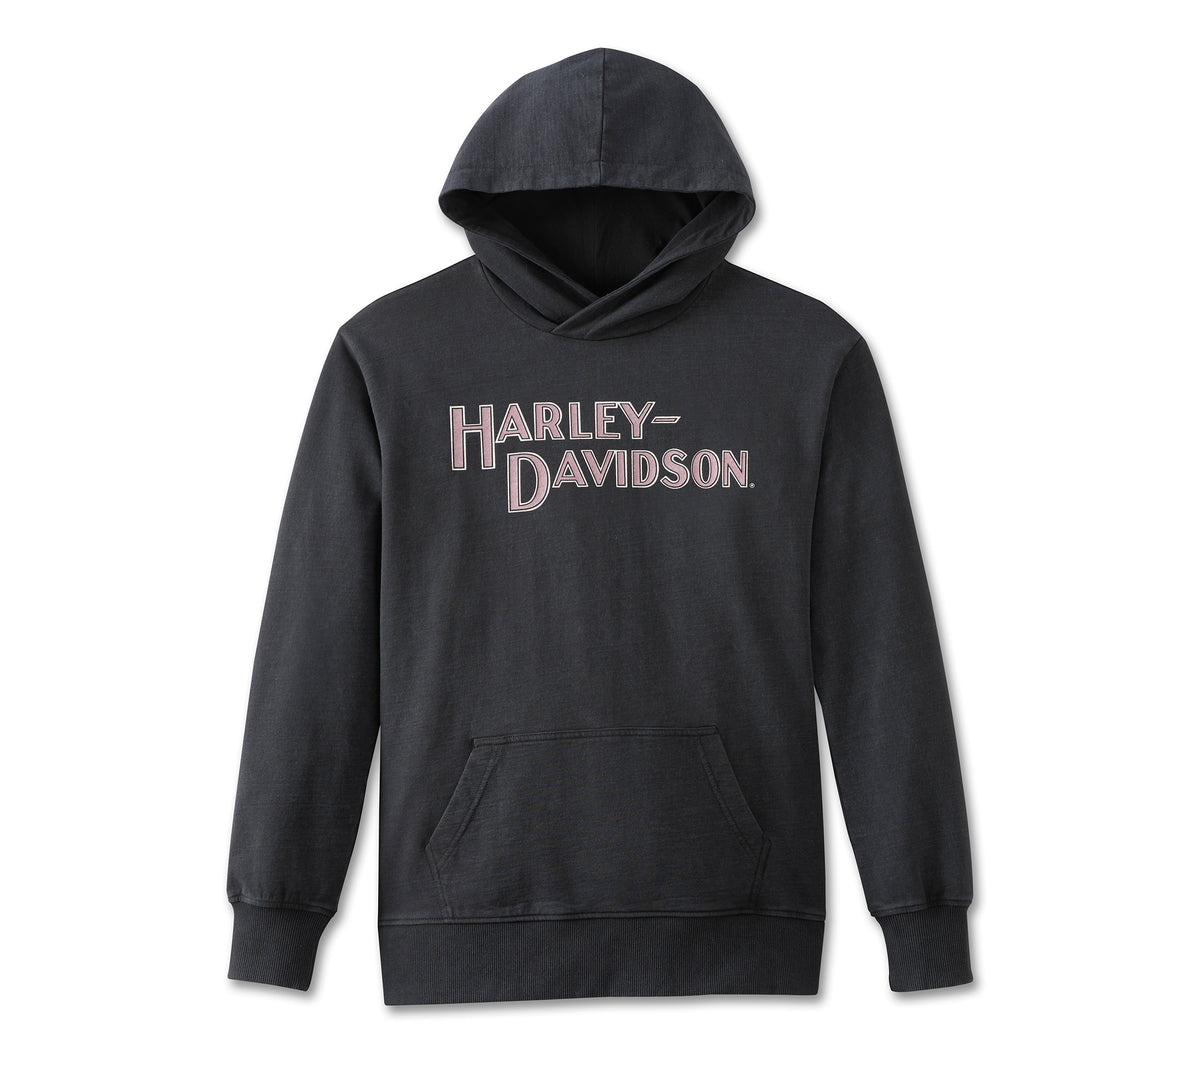 Harley Davidson Women's Hometown Pullover Hoodie